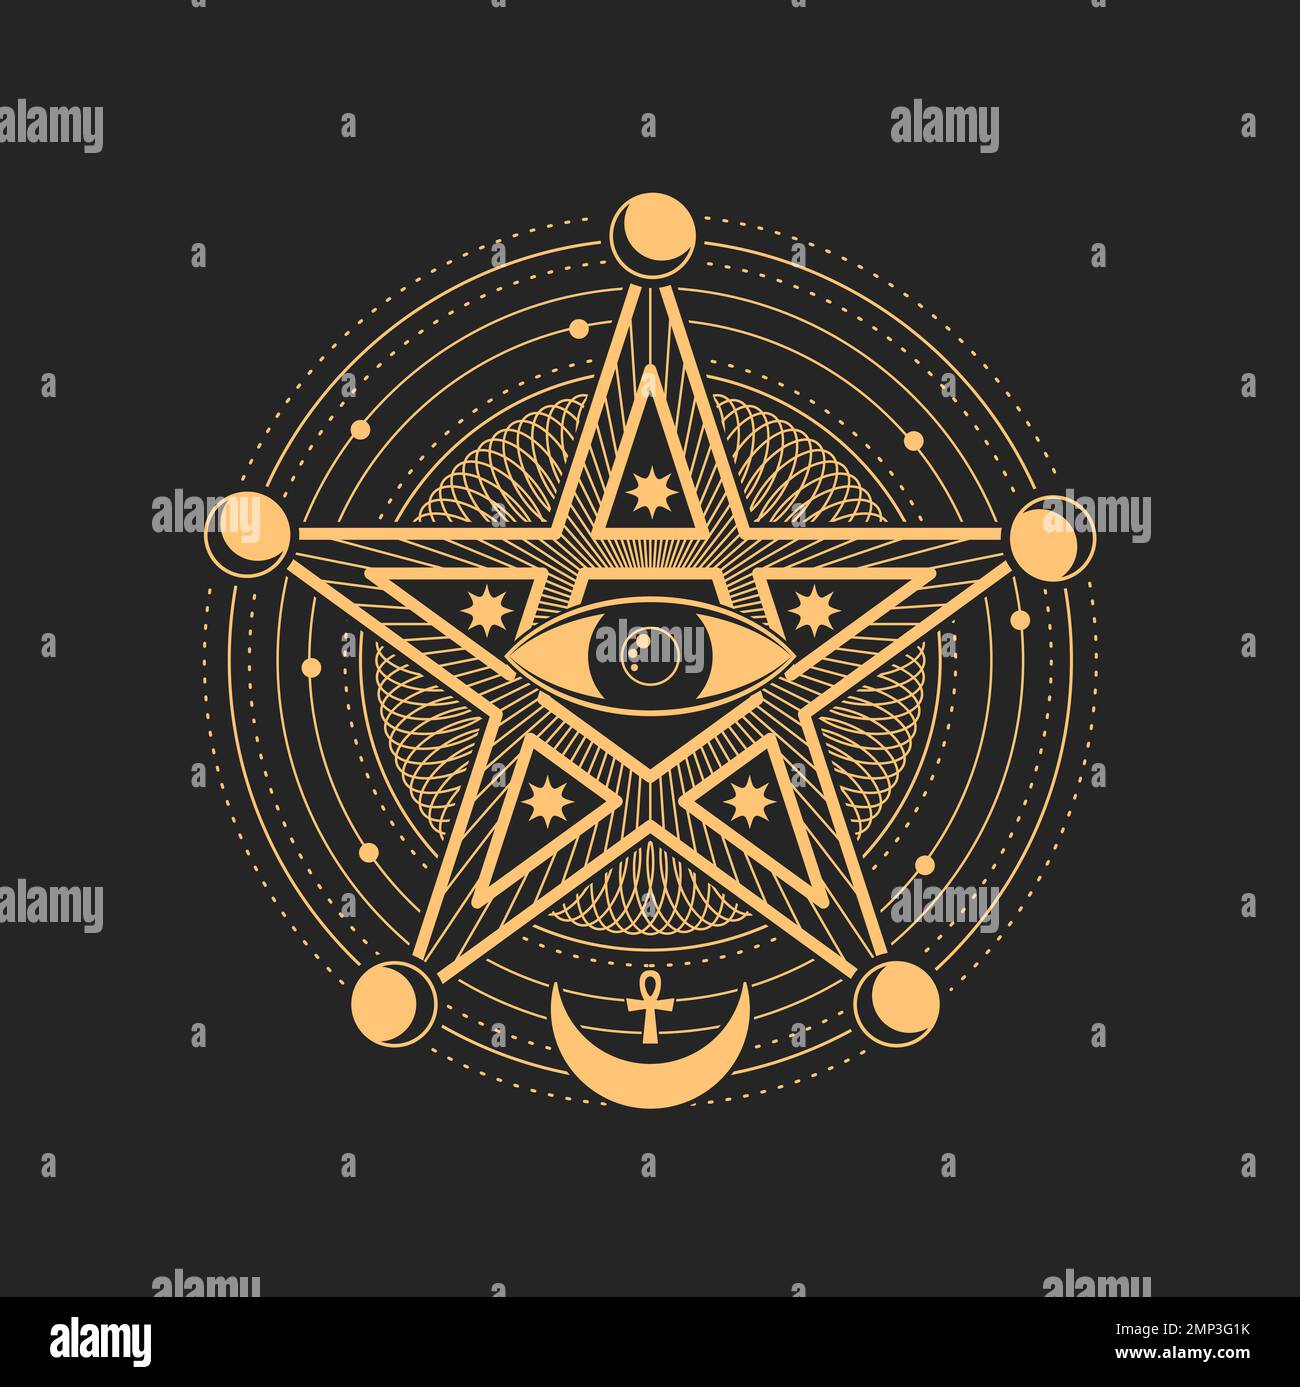 https://c8.alamy.com/comp/2MP3G1K/esoteric-occult-symbol-magic-tarot-card-vector-sign-eye-of-providence-inside-of-circle-with-pentagram-star-crescent-moon-and-stars-around-spiritual-mason-or-illuminati-symbolic-amulet-2MP3G1K.jpg